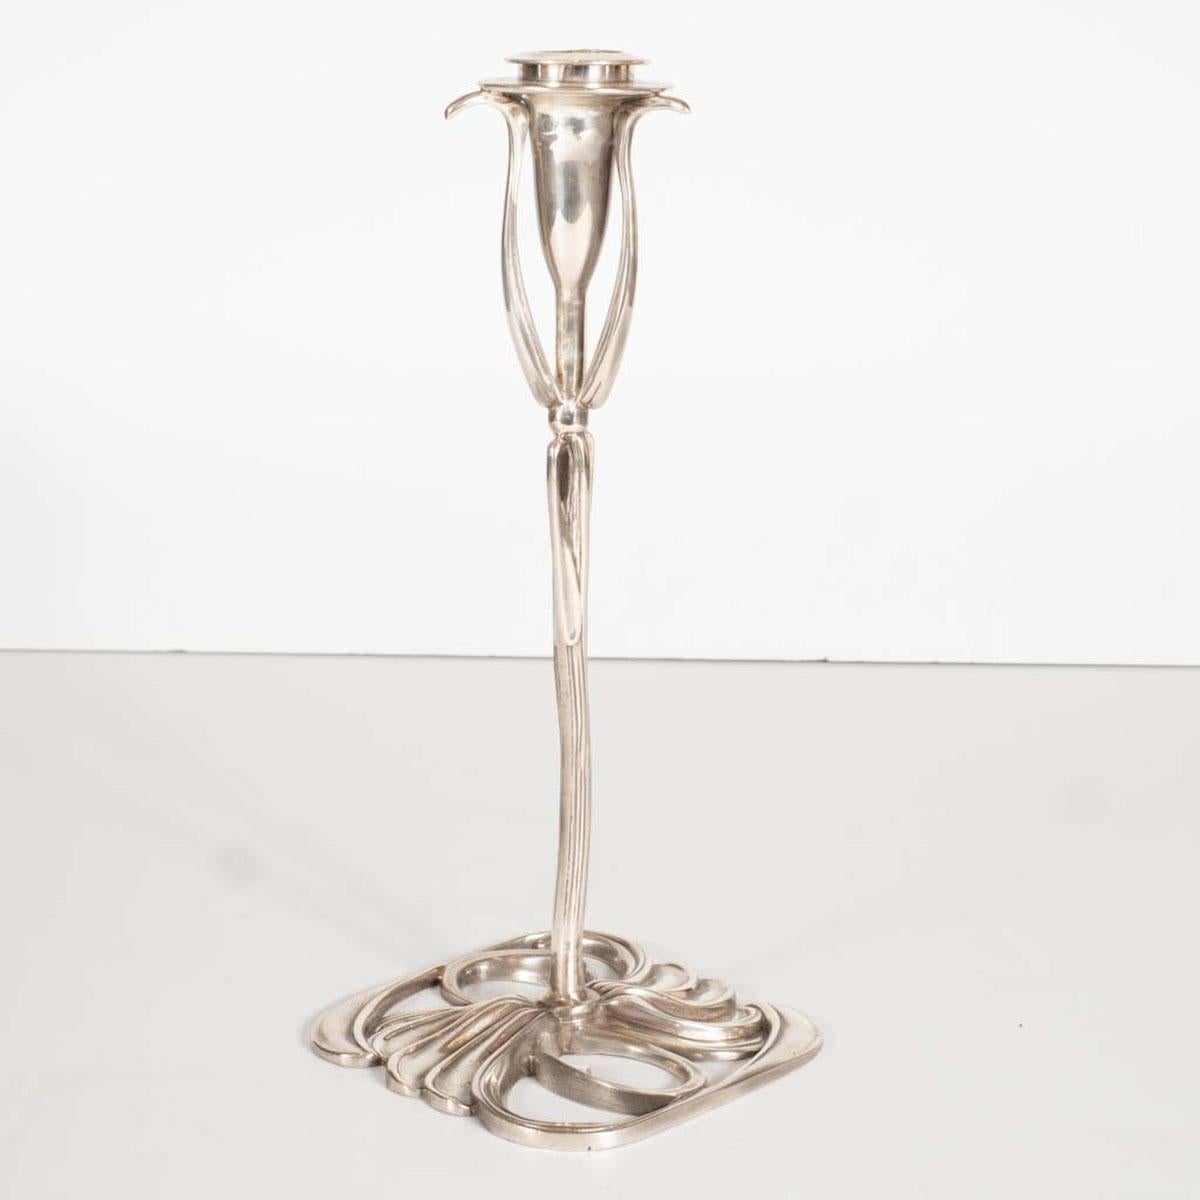 Silvered, cast bronze Art Nouveau style foliate candlestick.